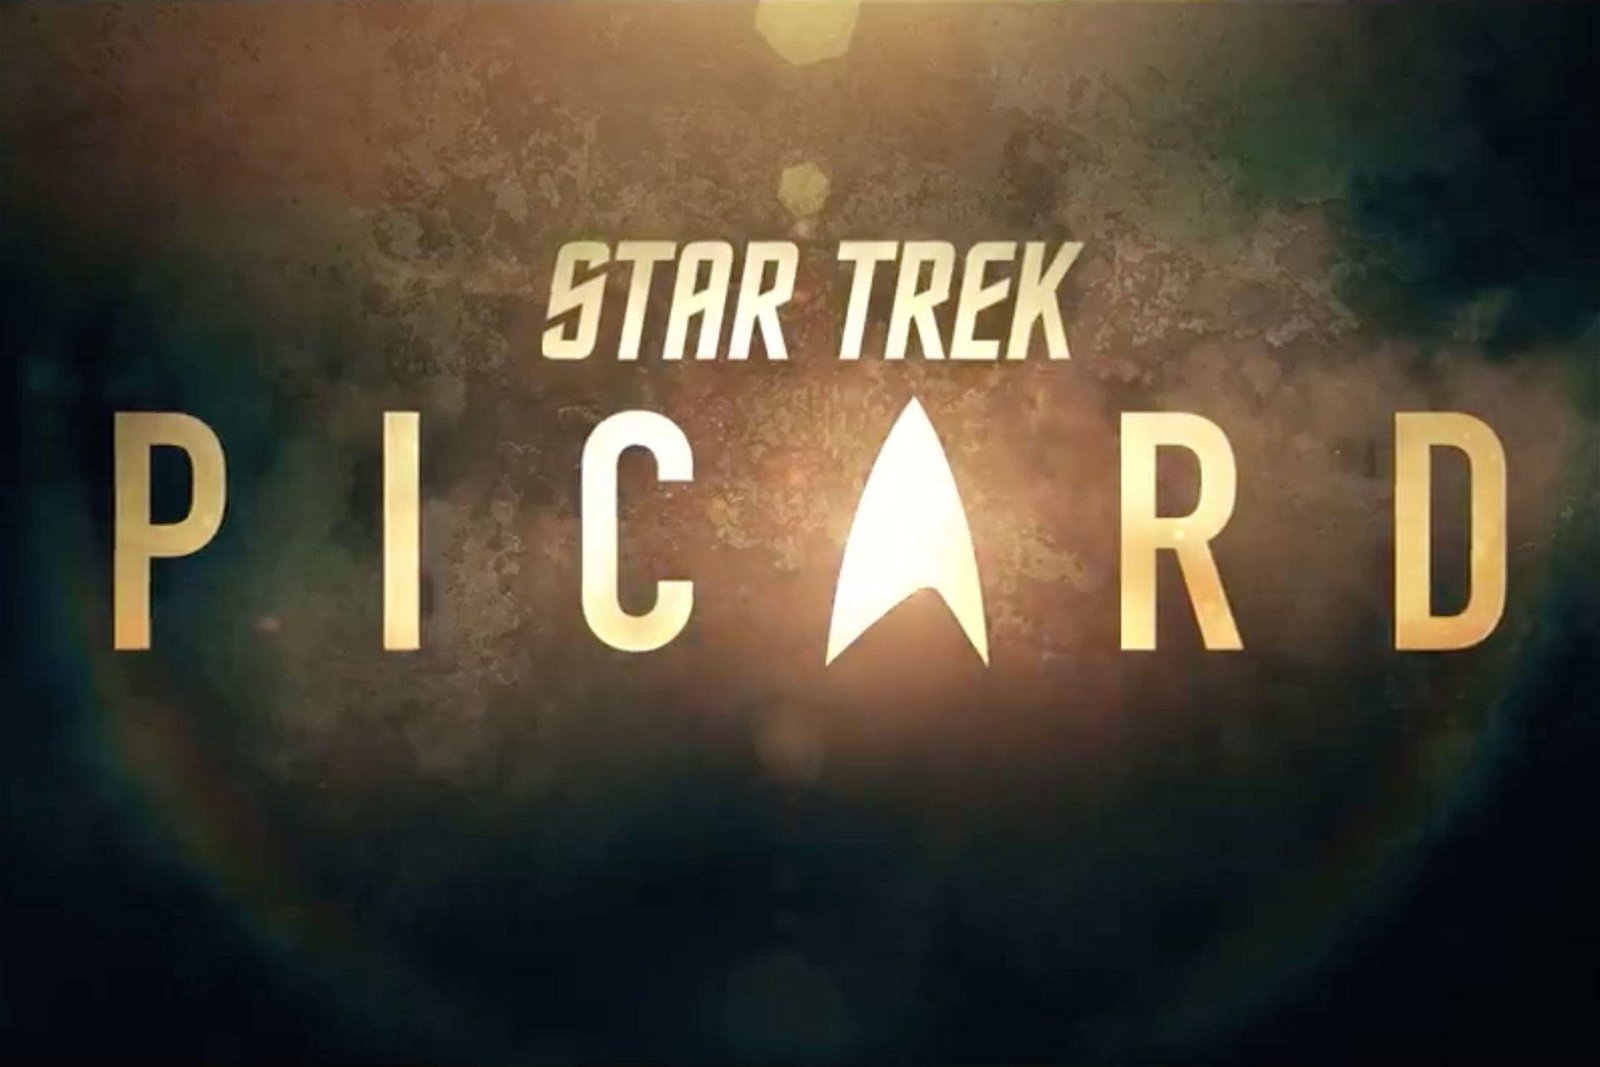 Immagine di Star Trek: la nuova serie si chiamerà Star Trek Picard